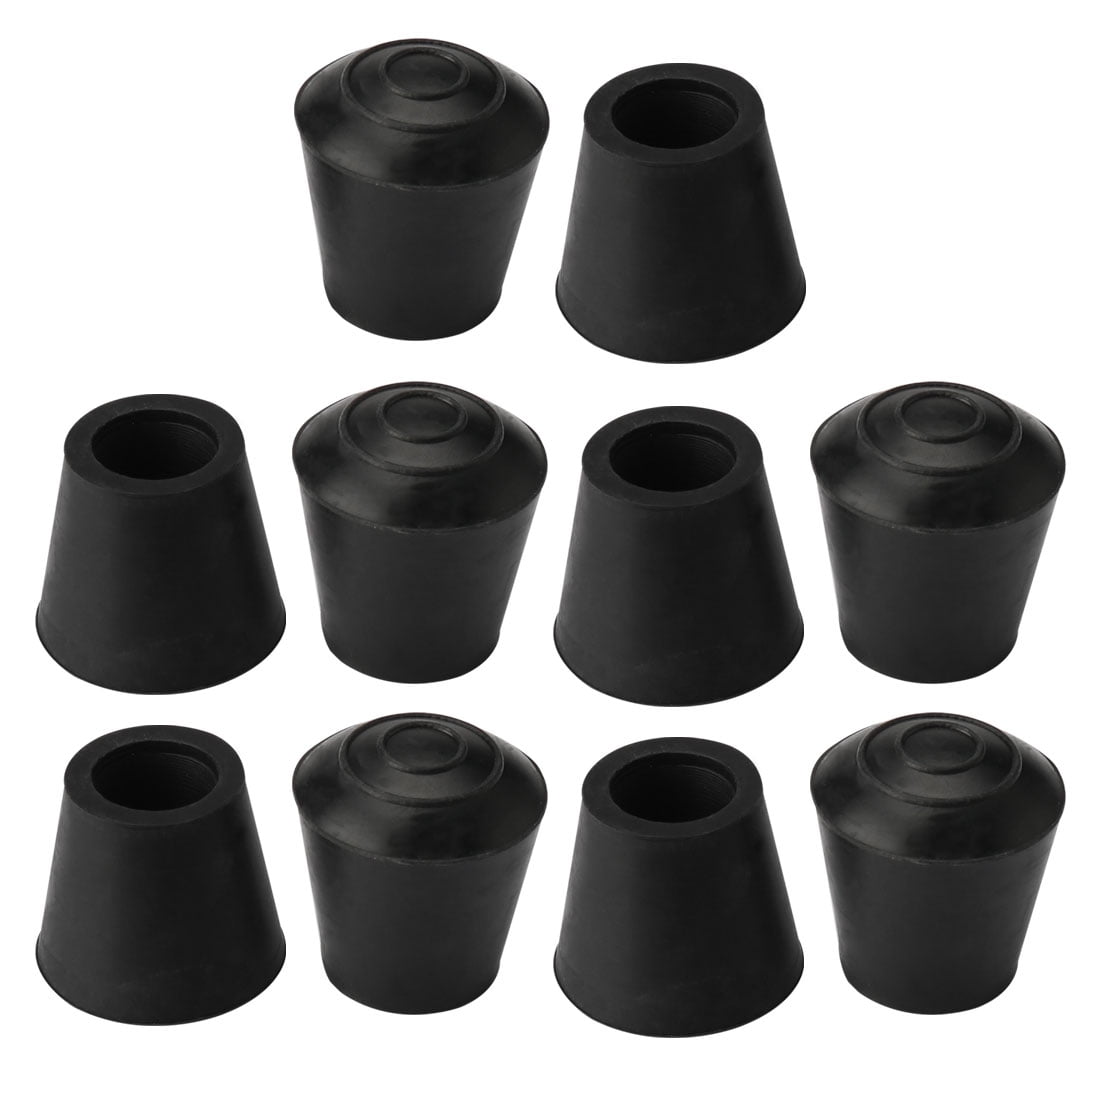 Black Rubber Table Leg Caps End Feet Cover Furniture Glide Floor Protector 18pcs 